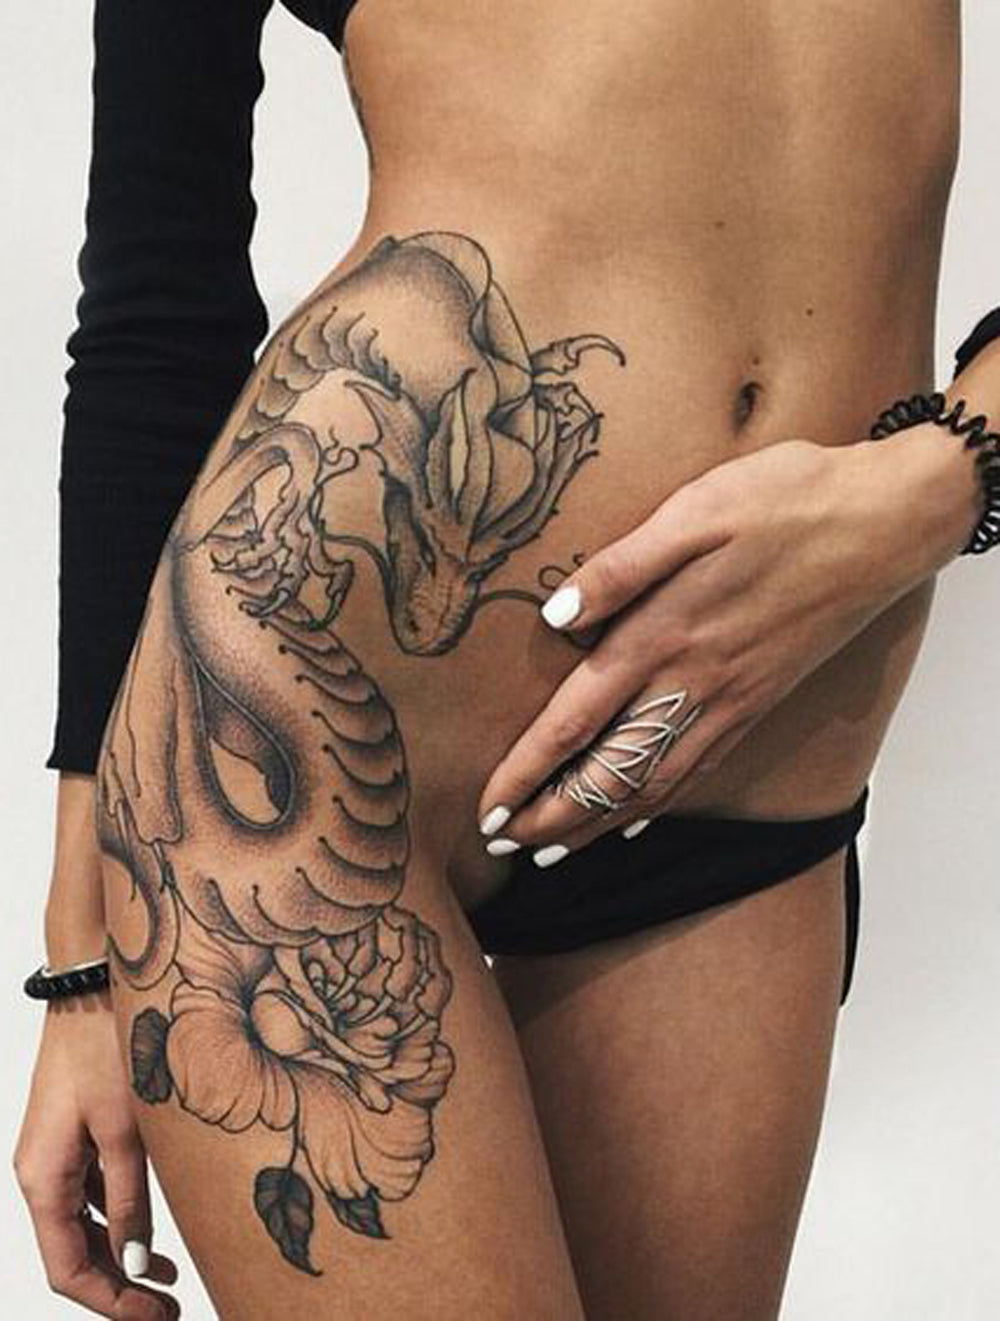 Cool Unique Dragon Thigh Tattoo Ideas for Women - Black and White Rose Side Leg Hip Tatt -  ideas grandes del tatuaje del dragón negro y del muslo color de rosa para las mujeres - www.MyBodiArt.com